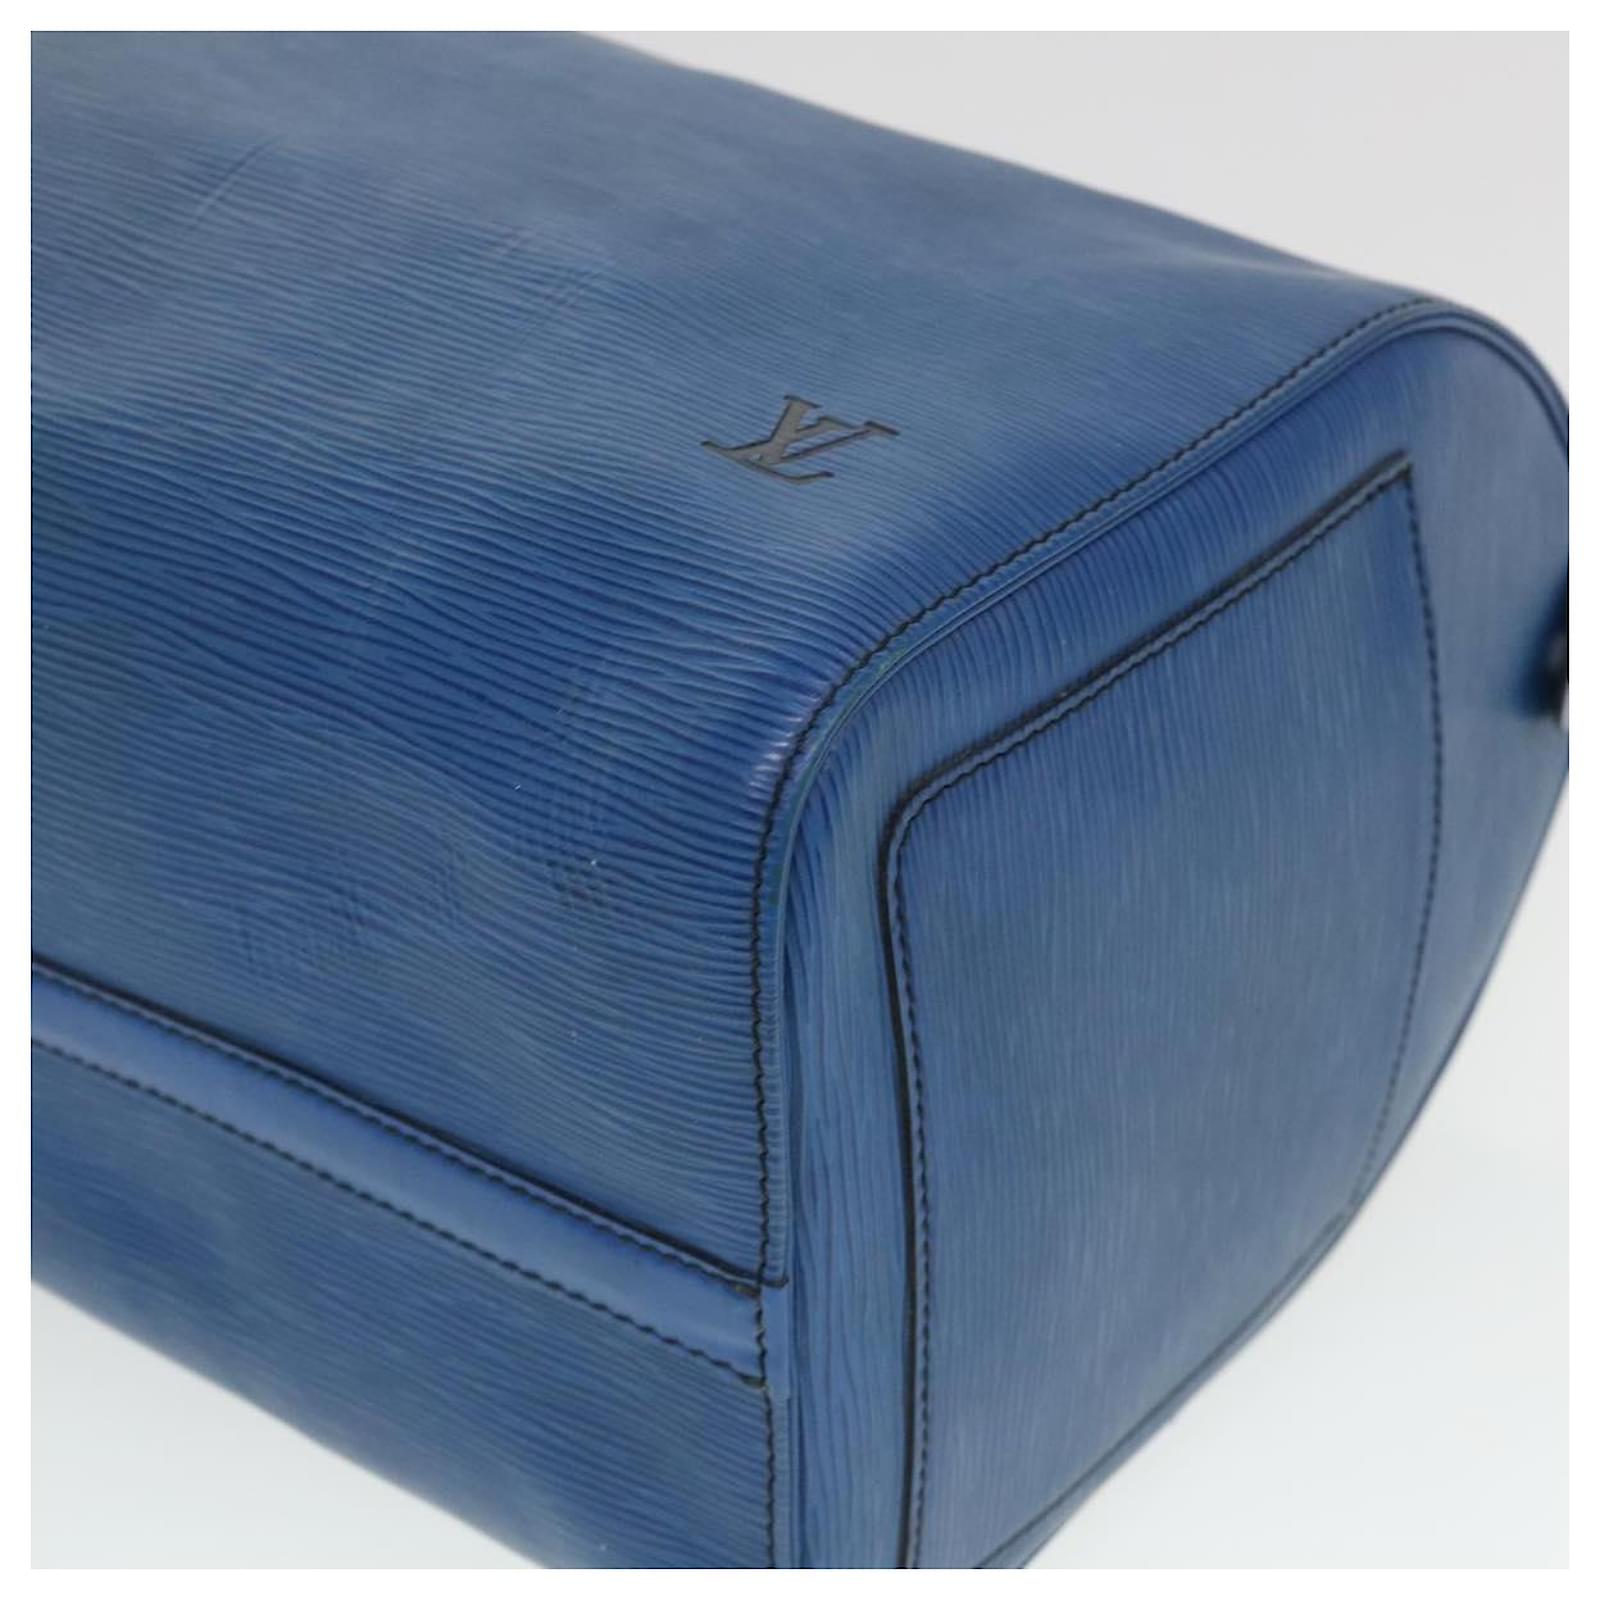 LOUIS VUITTON Handbag M42985 Speedy 40 vintage Epi Leather blue